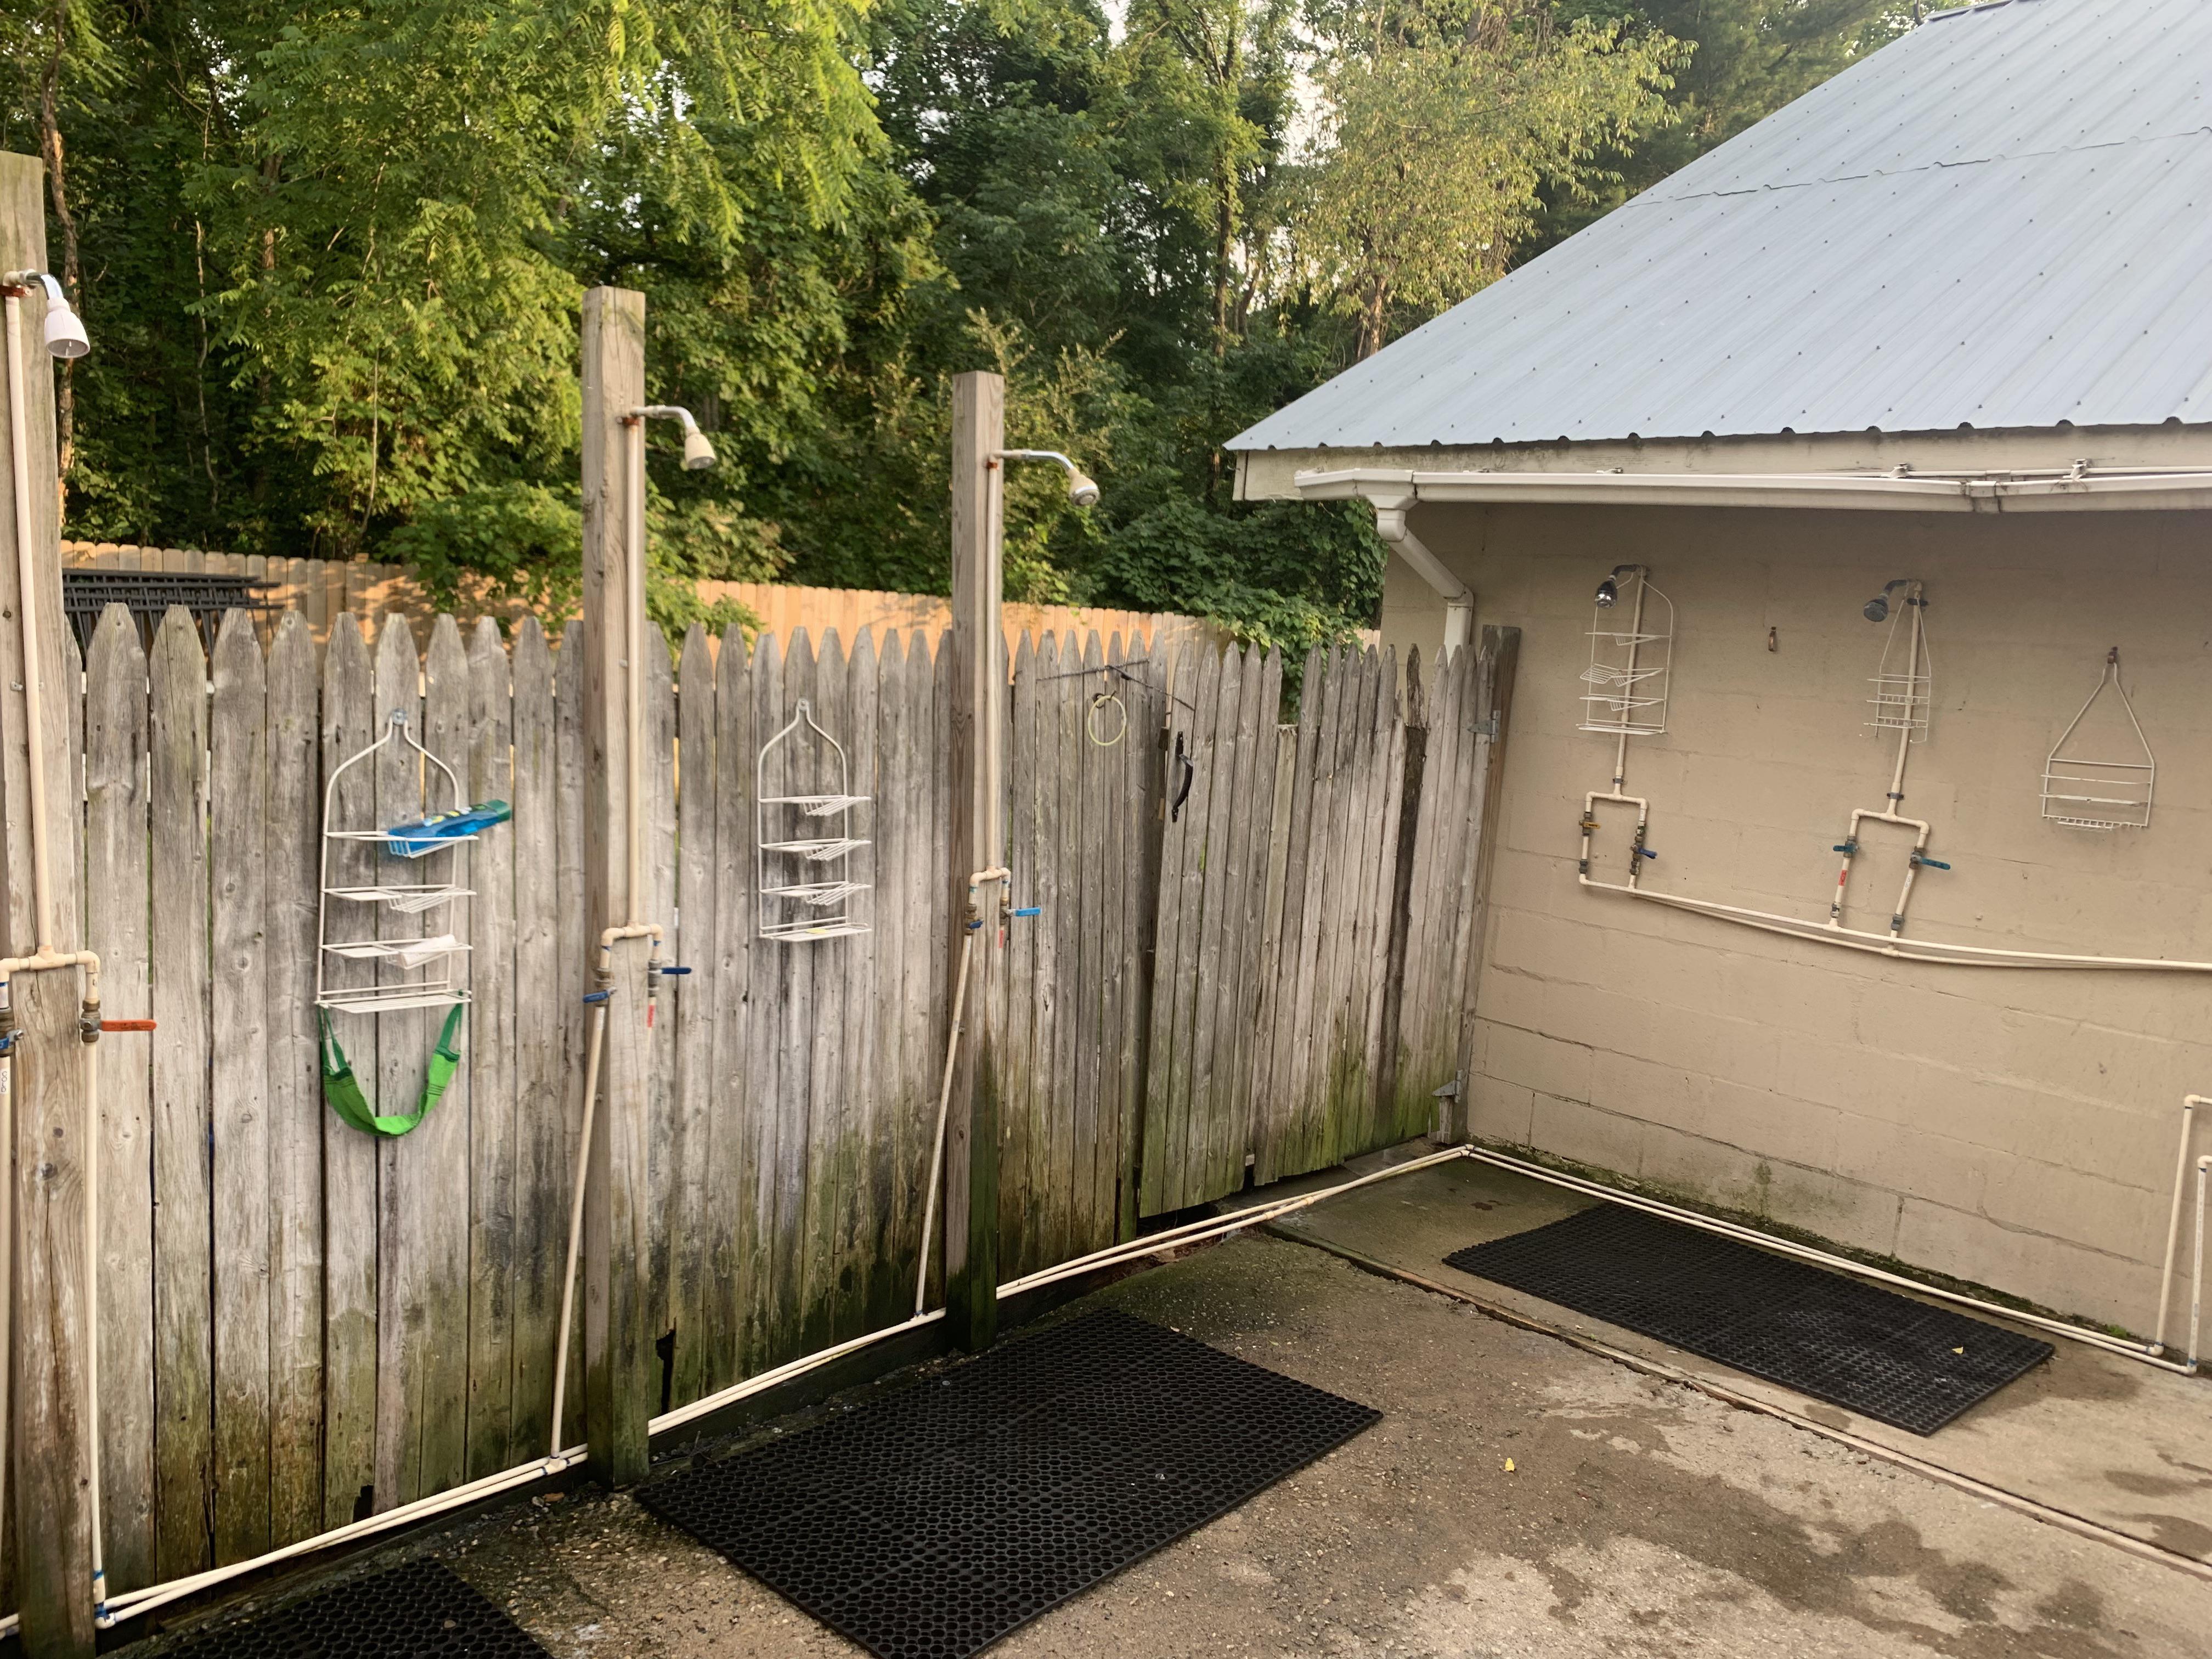 Outdoor Communal Shower At Camp Buckwood Indiana Scrolller